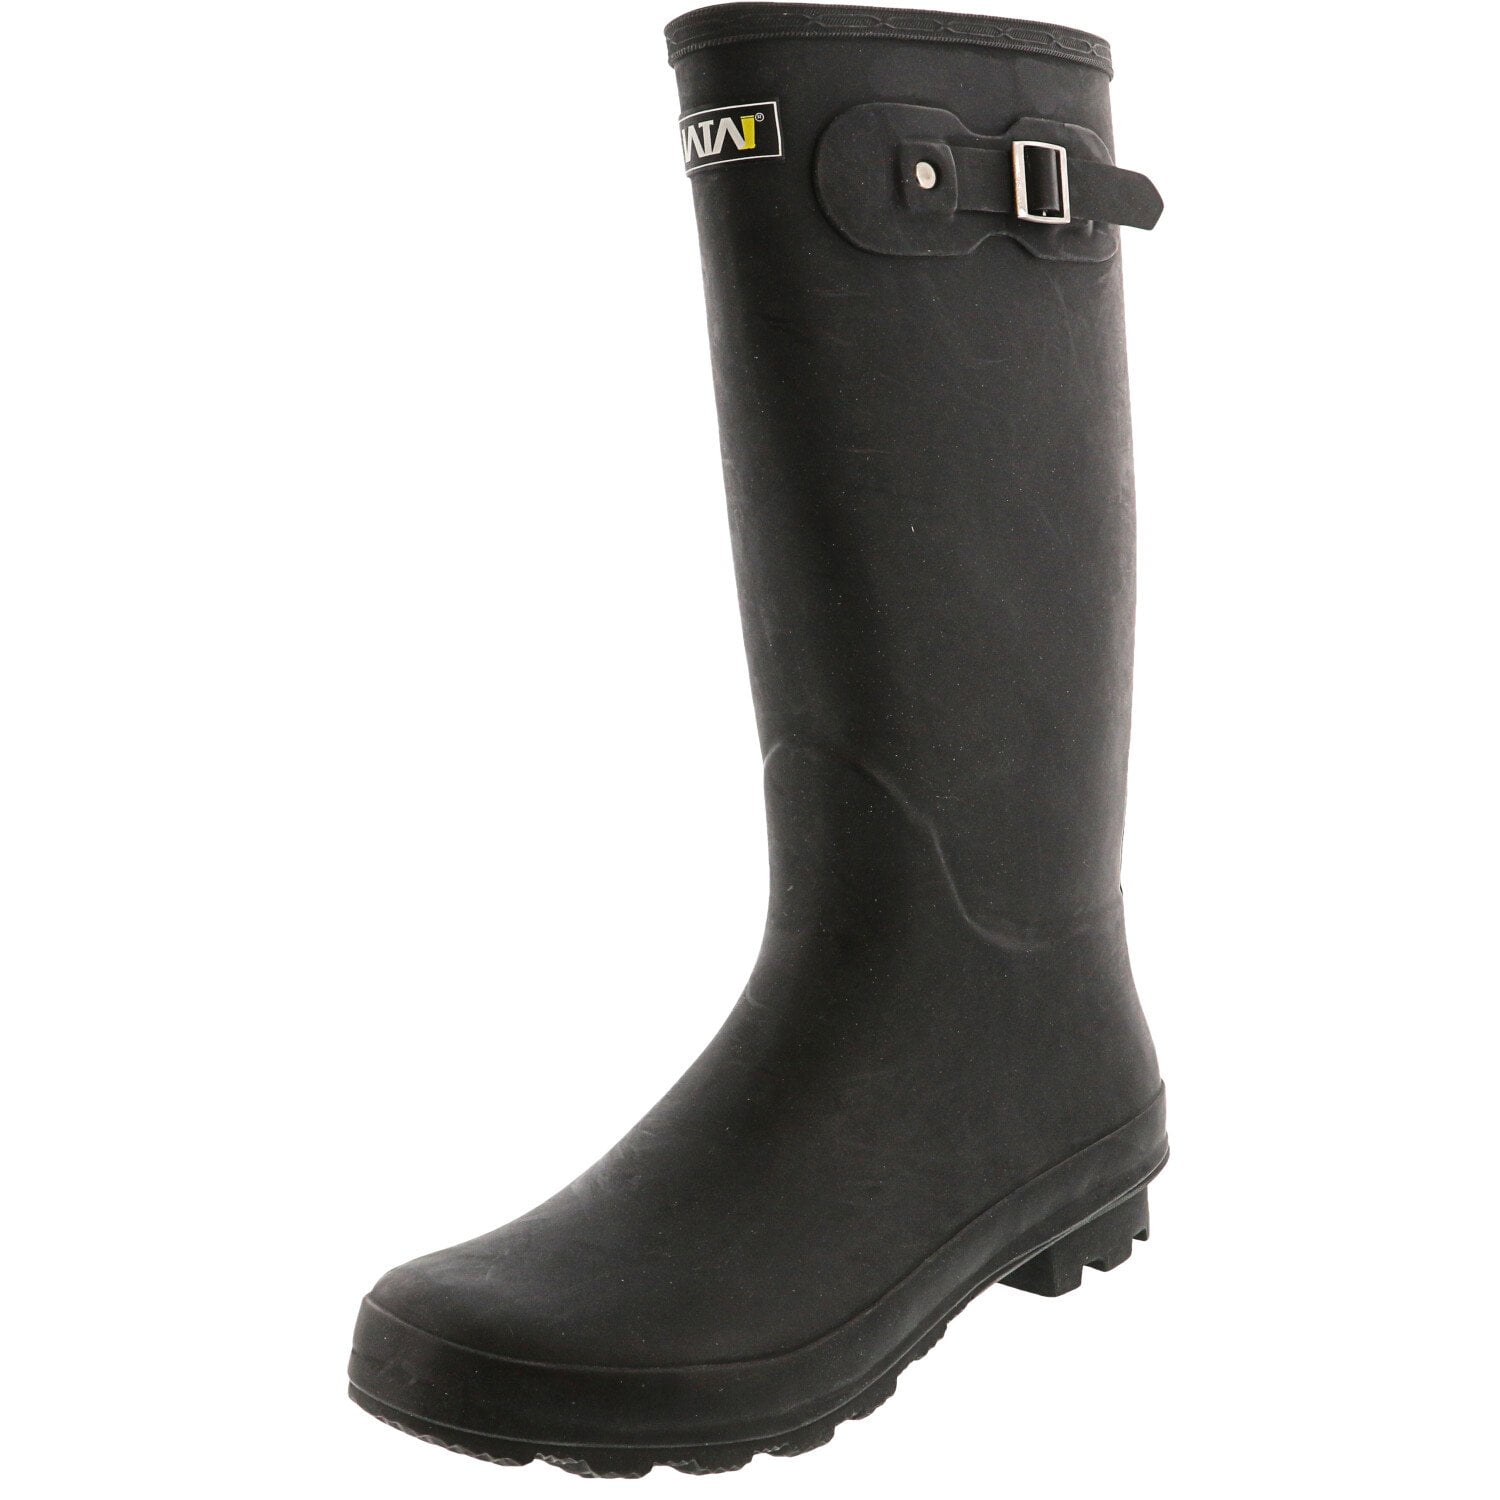 Wtw Women's Original Tall Rain Boots Black Mid-Calf Rubber Boot - 10M ...